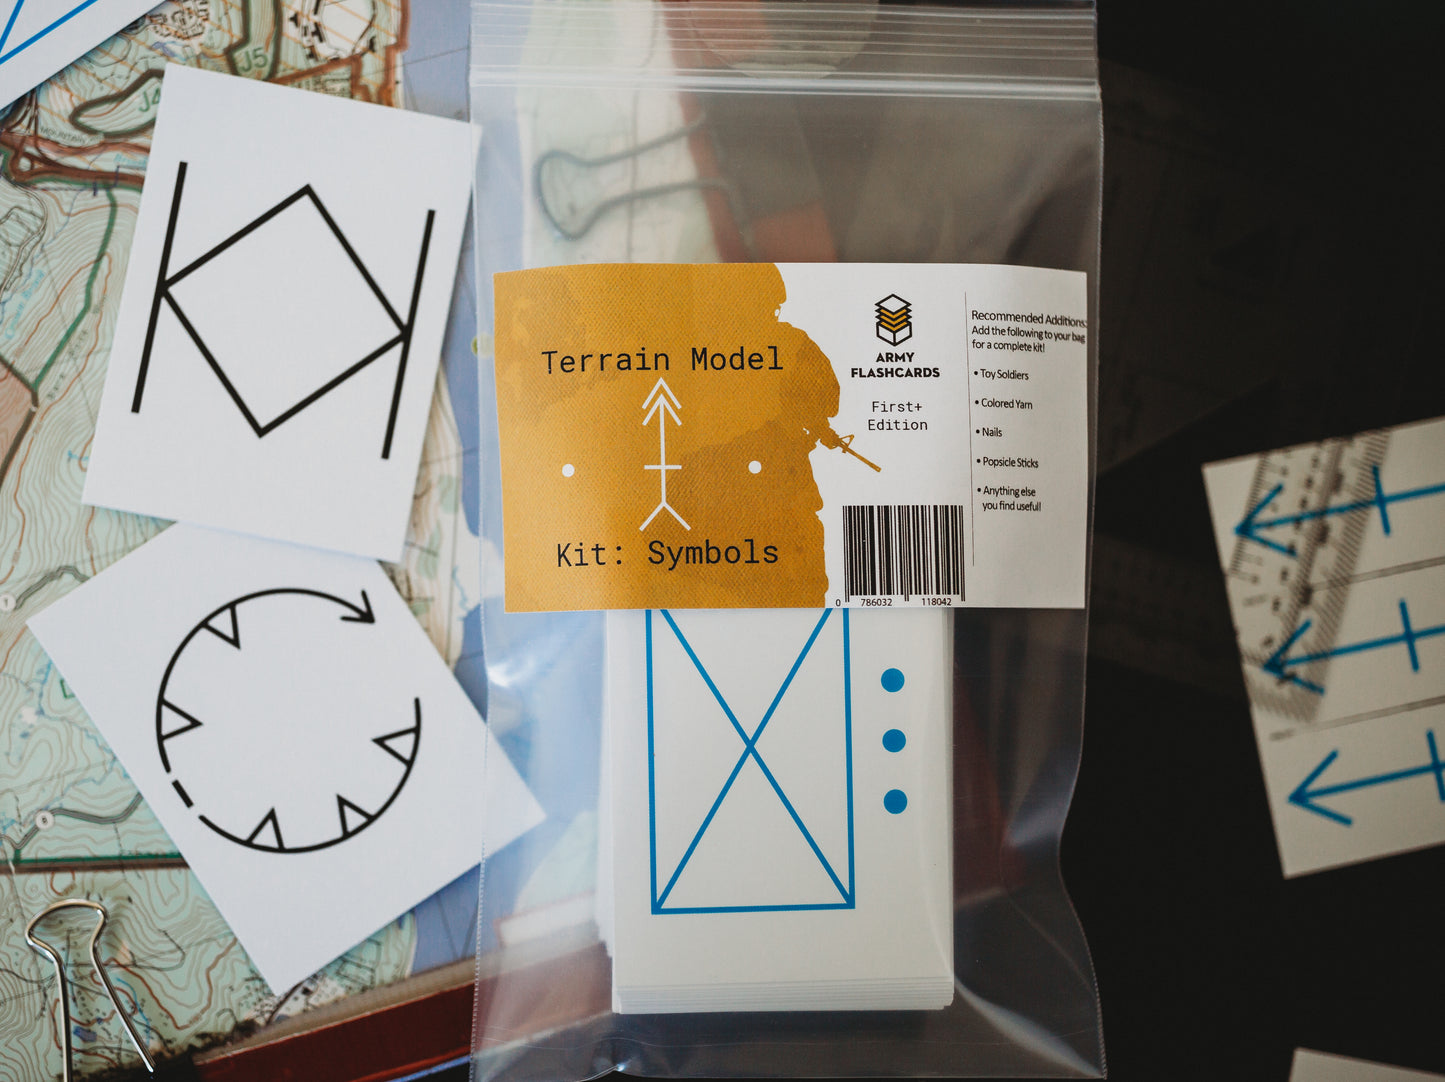 Terrain Model Kit: Symbols - Army Flashcards